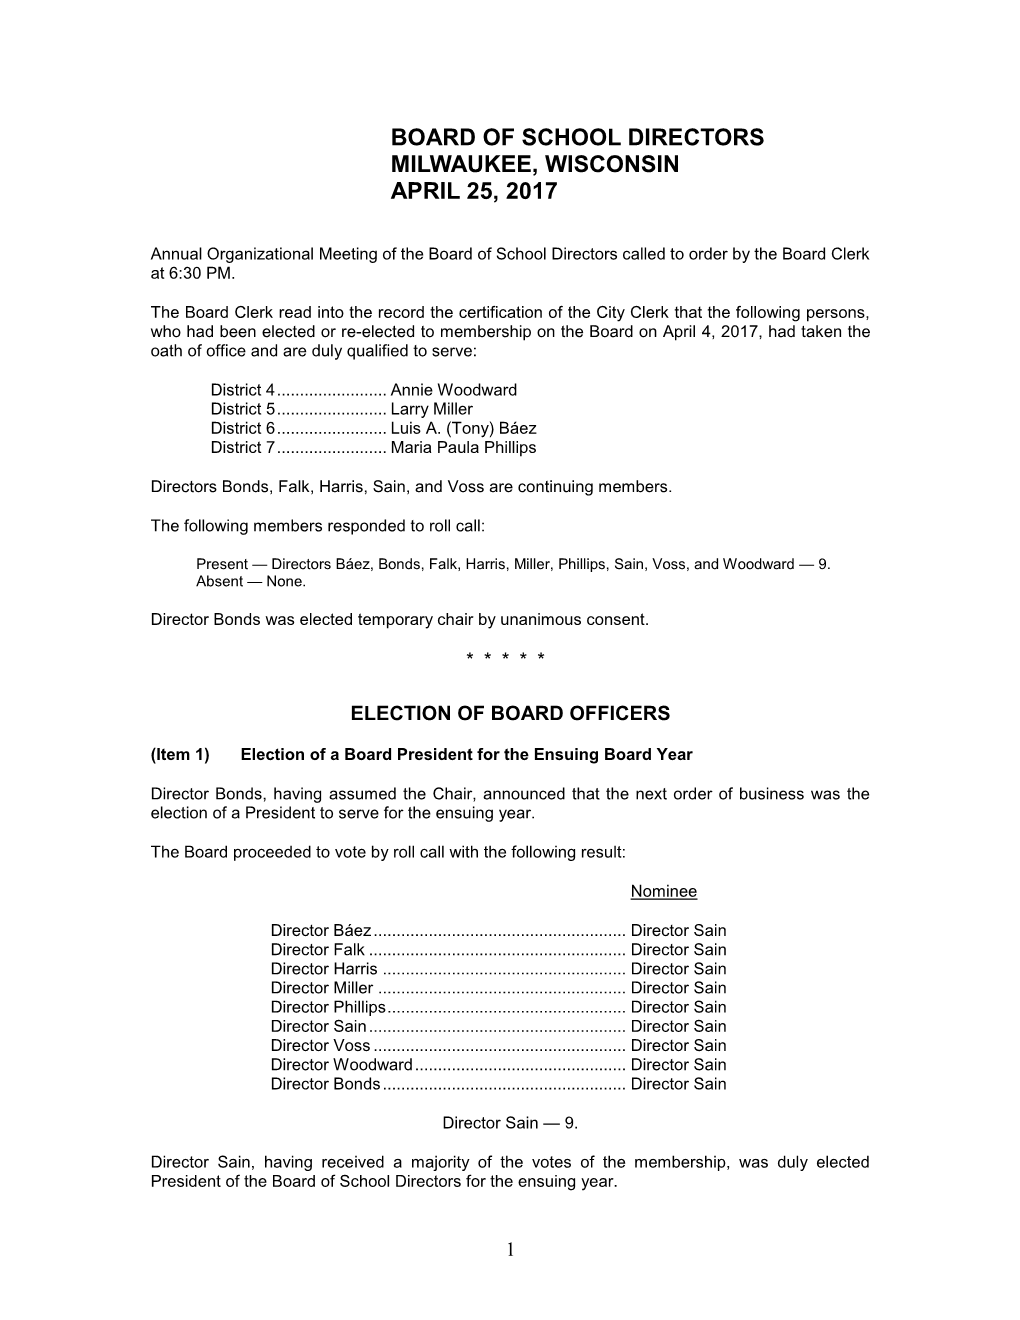 May 2017 Proceedings of the Milwaukee Board of School Directors